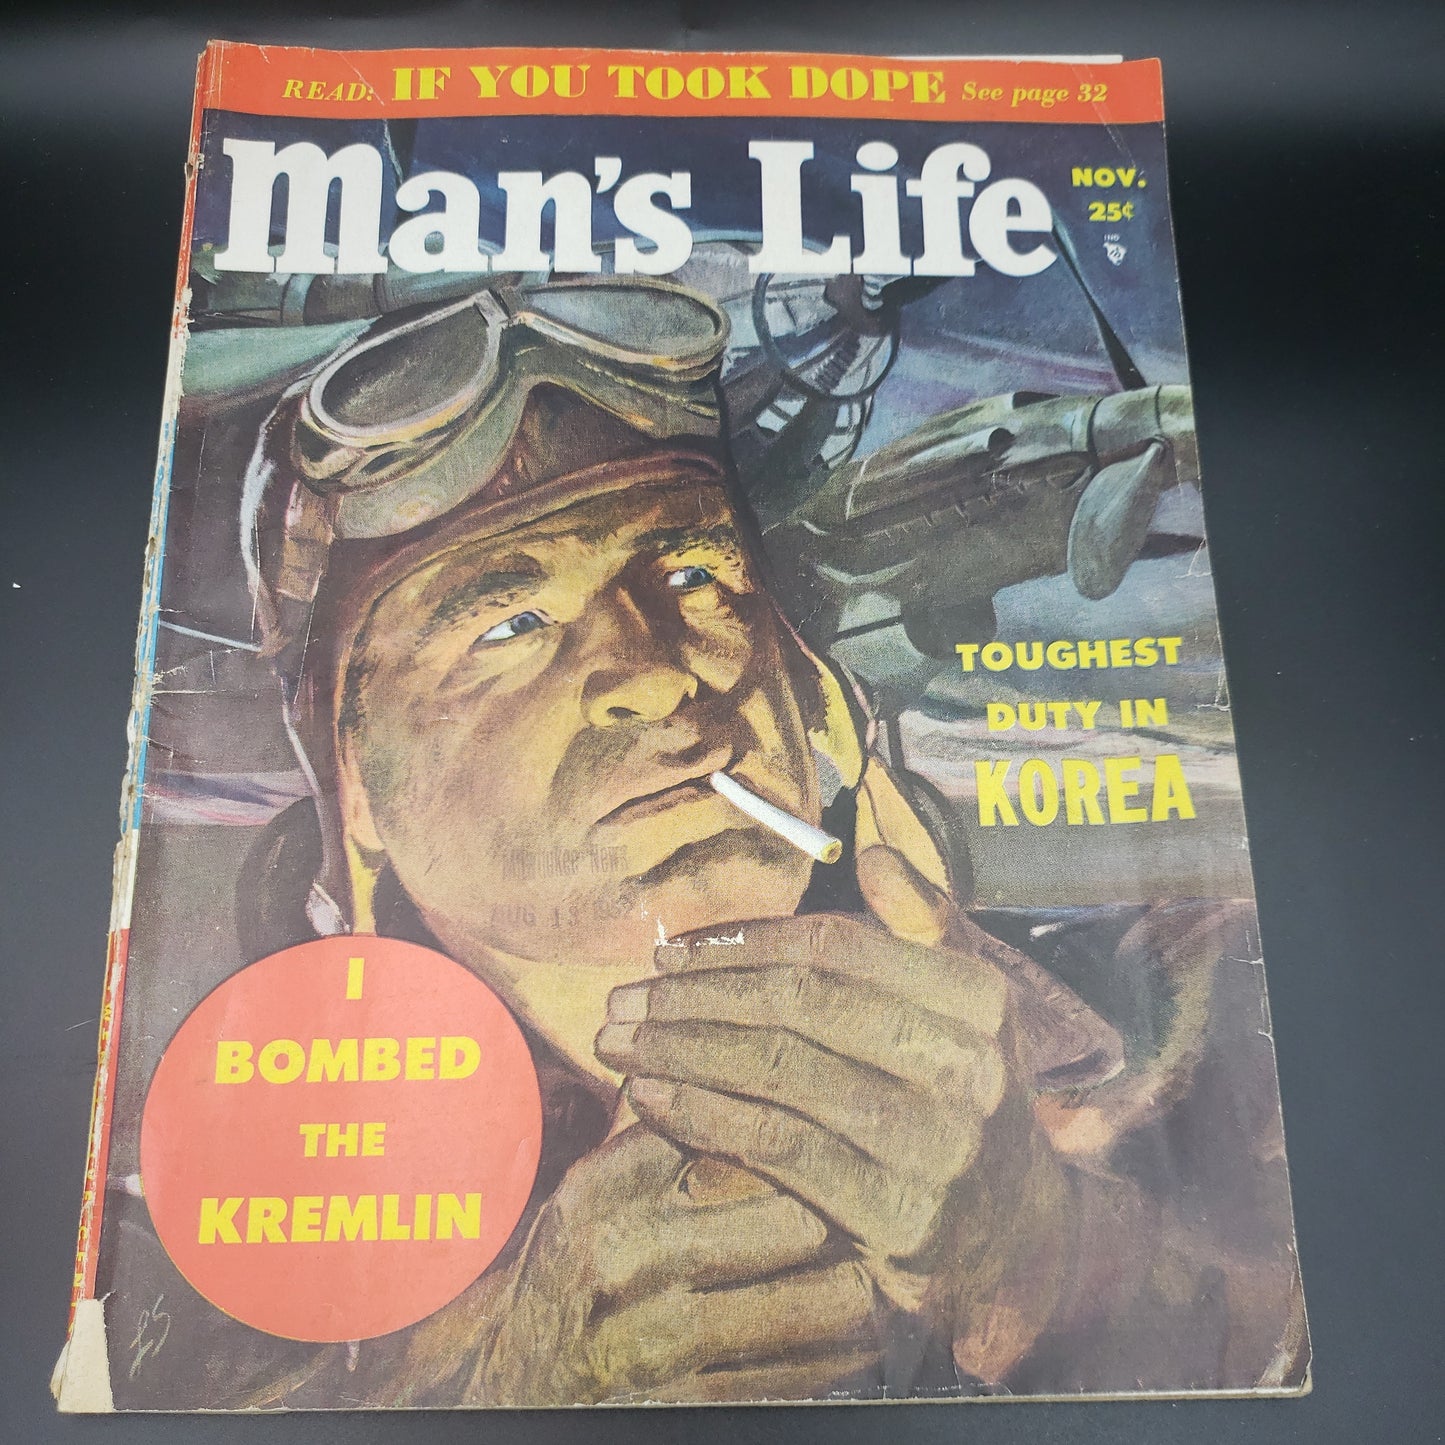 Man's Life vol 1 issue 1 November 1952